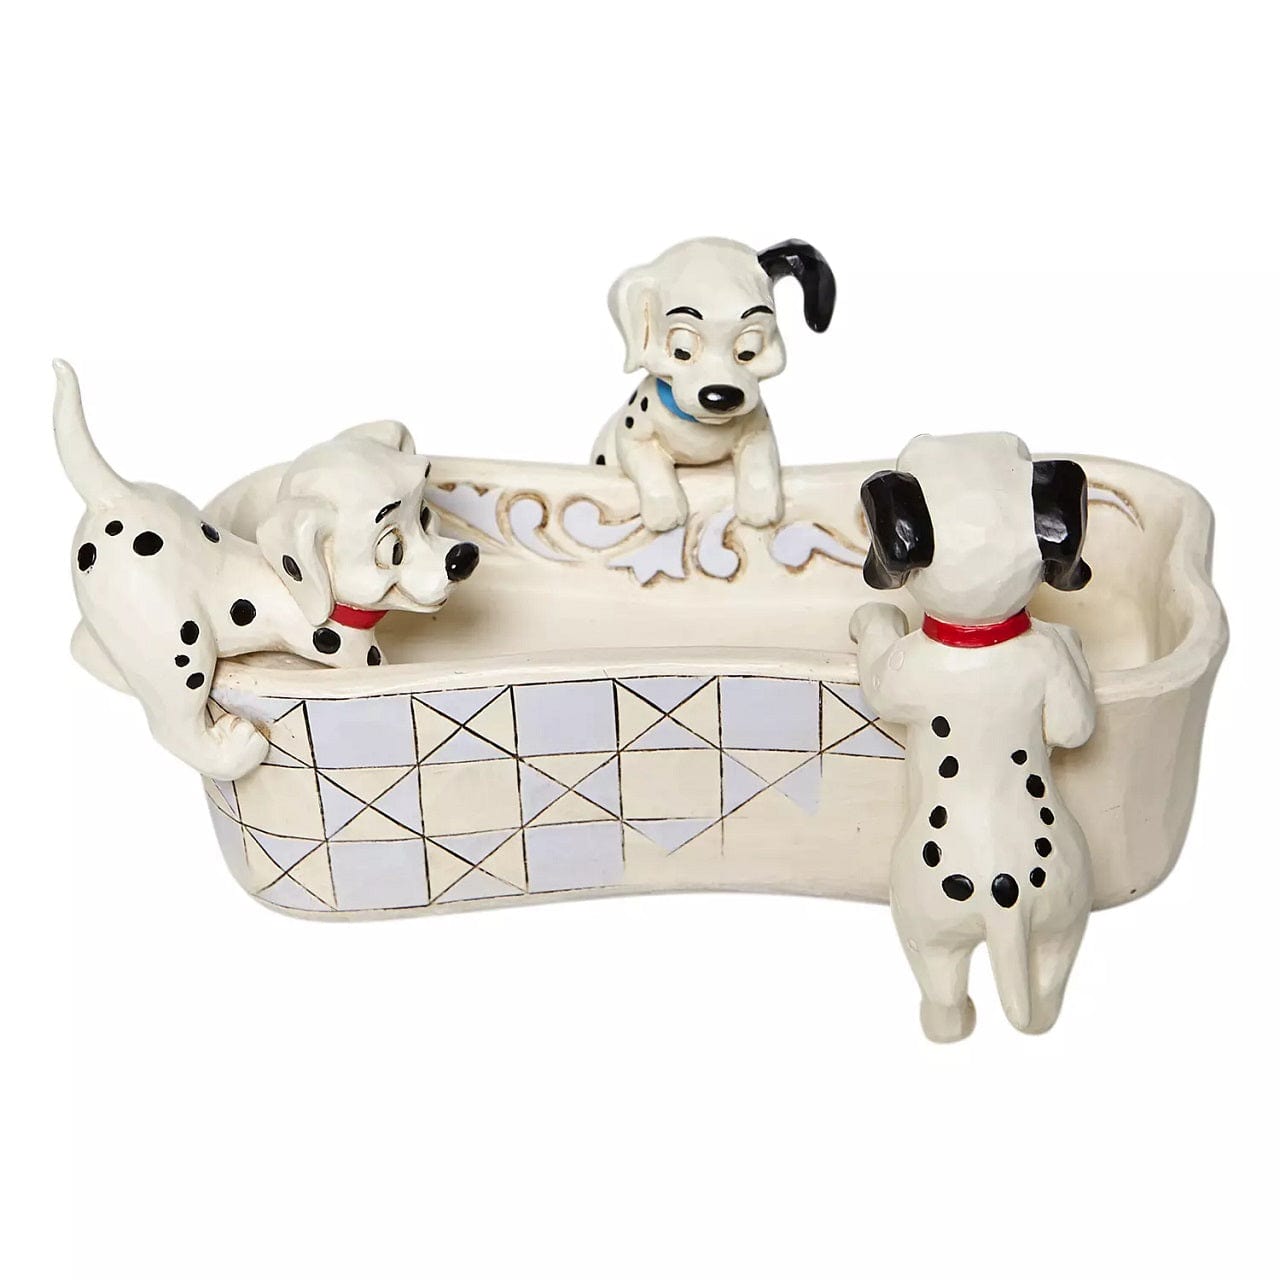 Enesco Disney Ornament Disney Traditions Figurine - Puppy Bowl